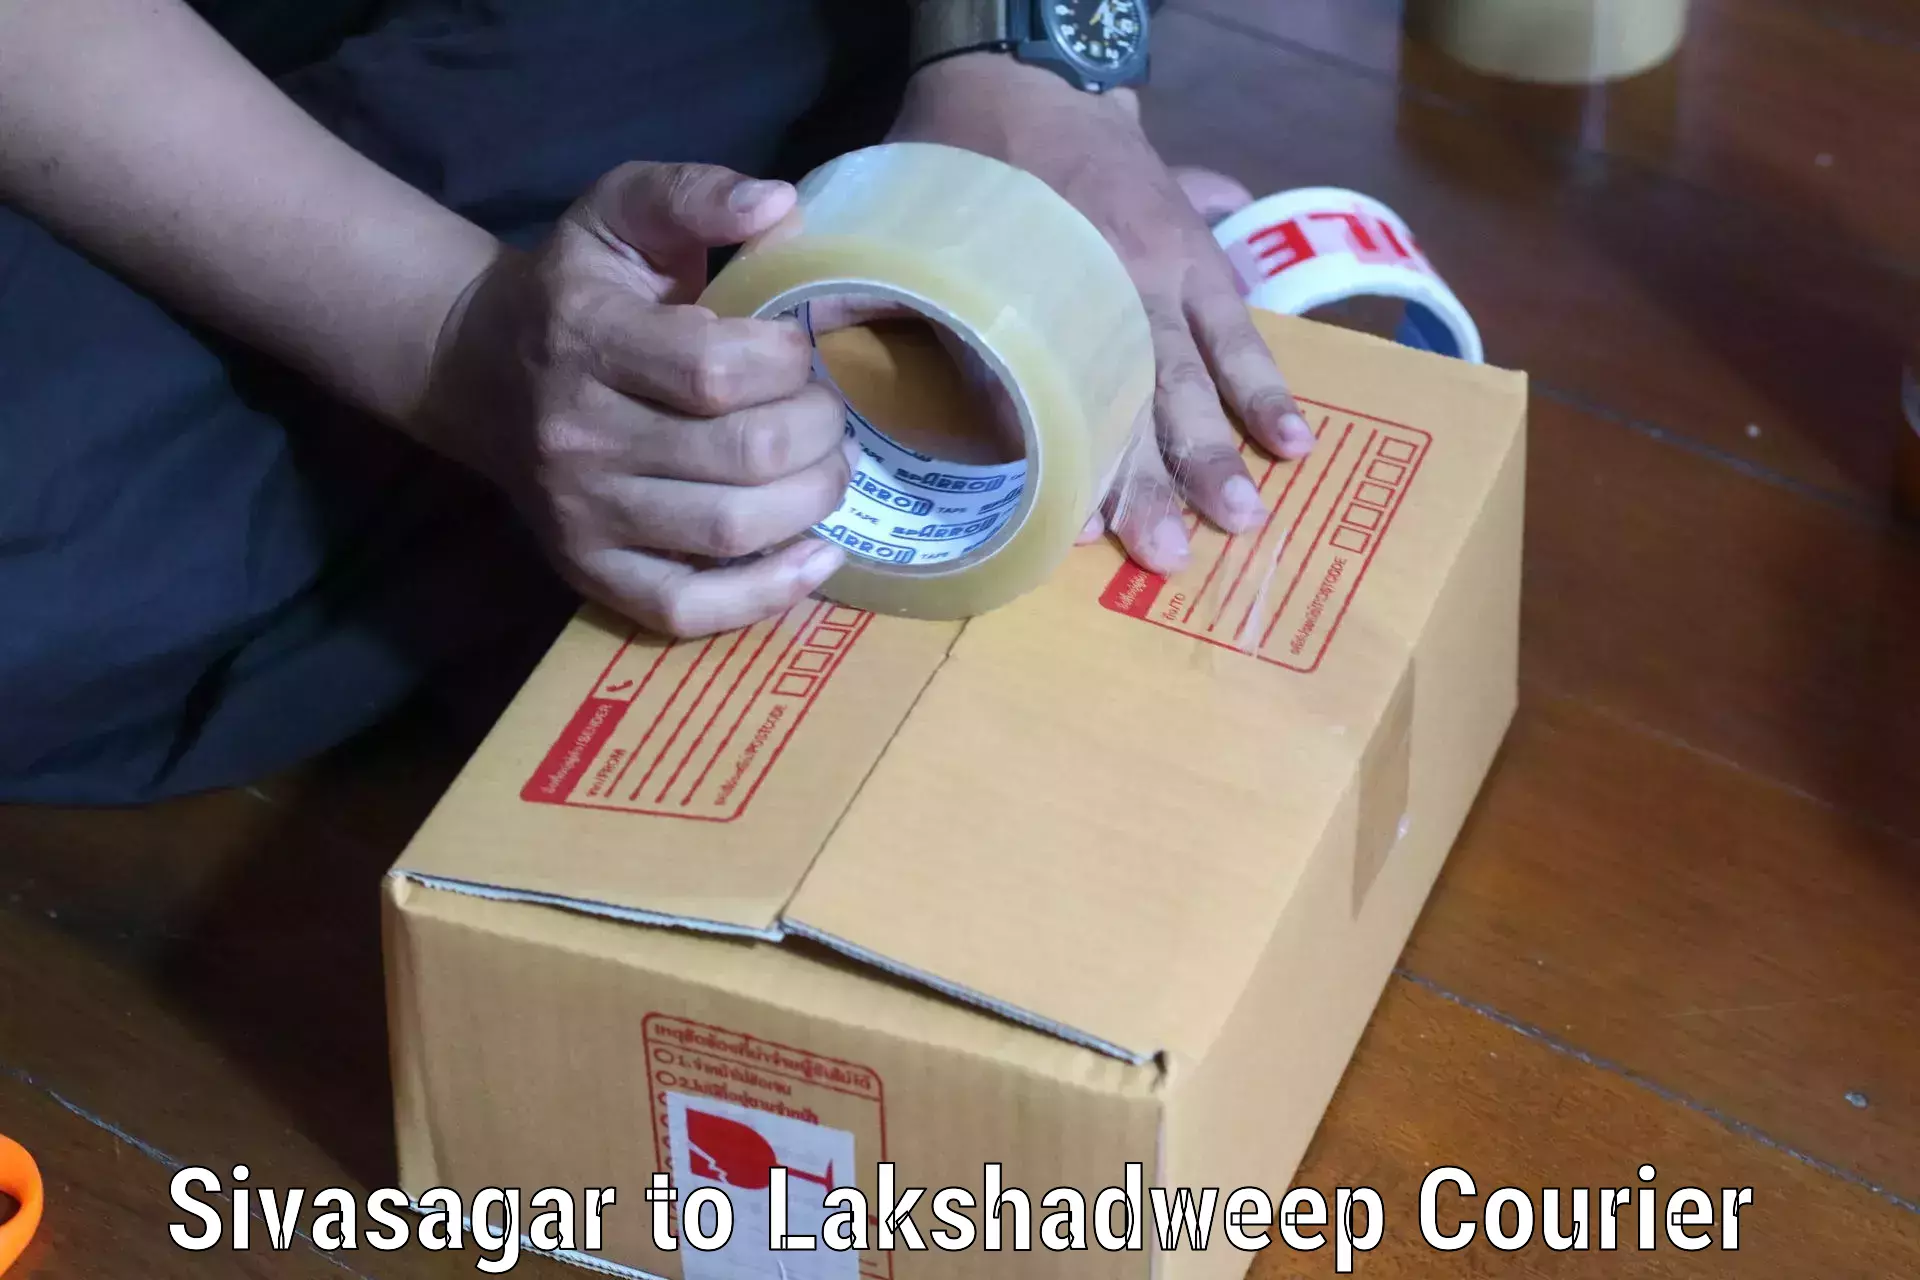 Courier service partnerships Sivasagar to Lakshadweep